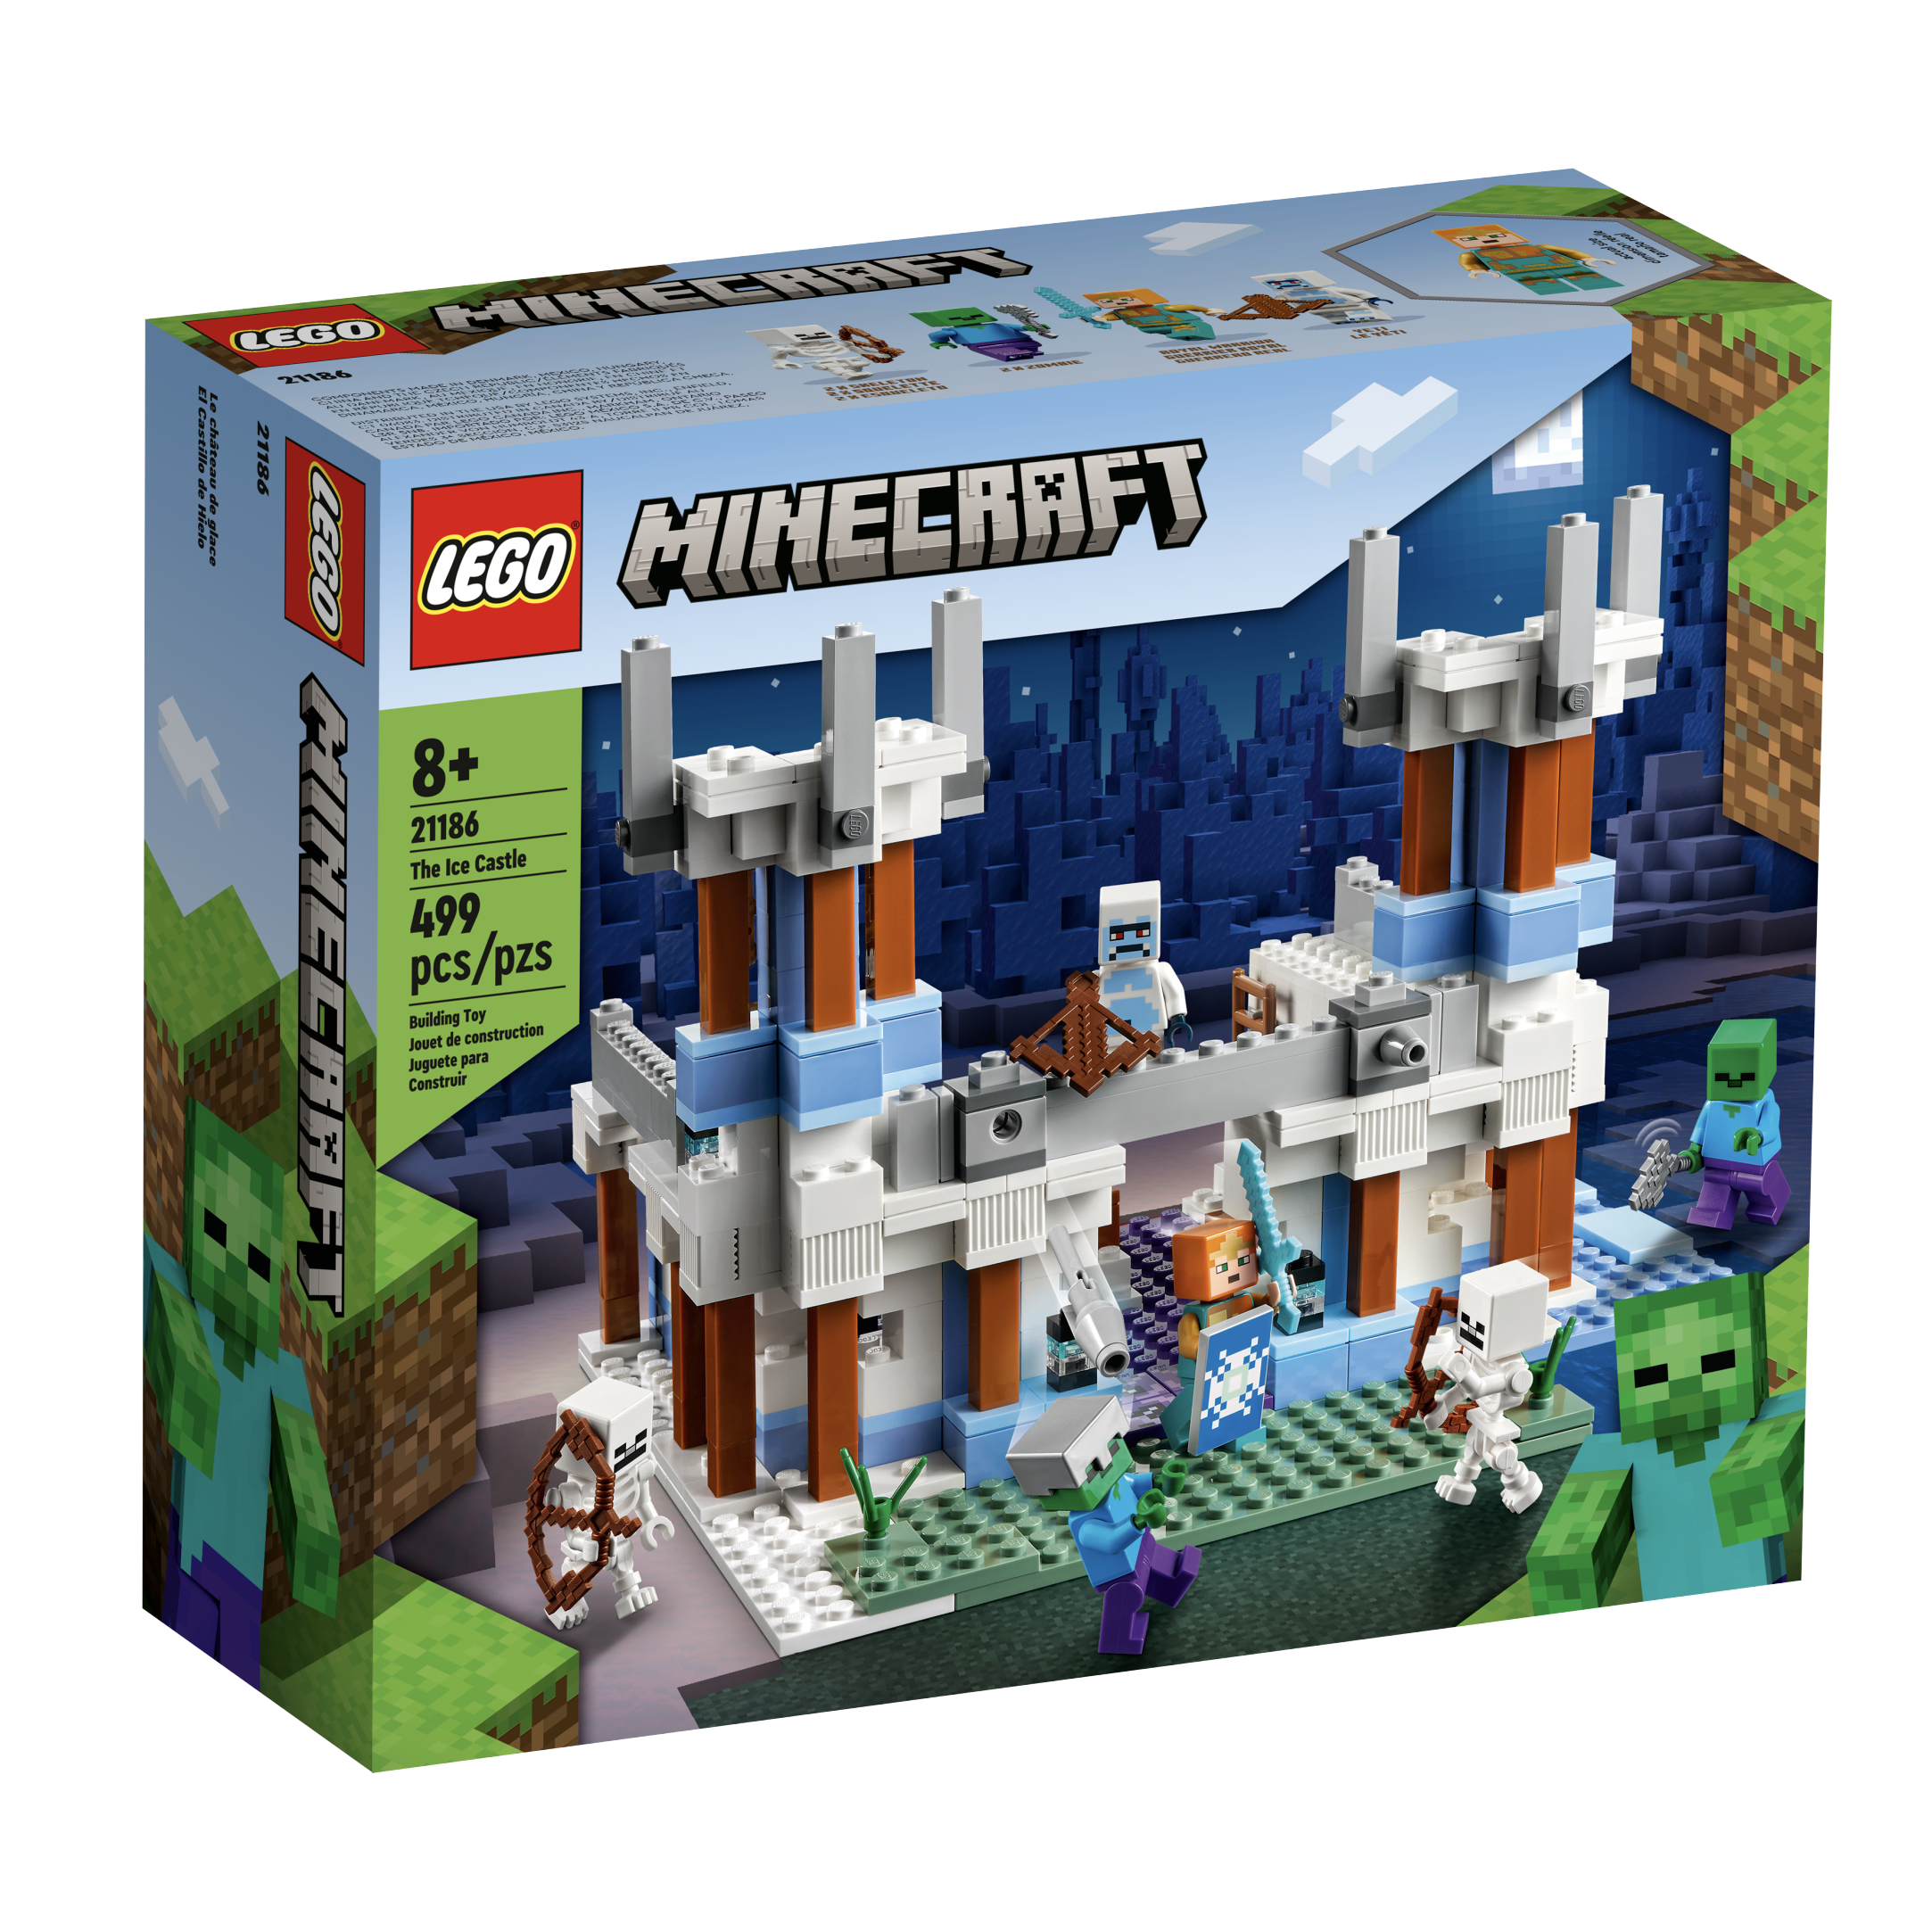 21186 Minecraft The Ice Castle